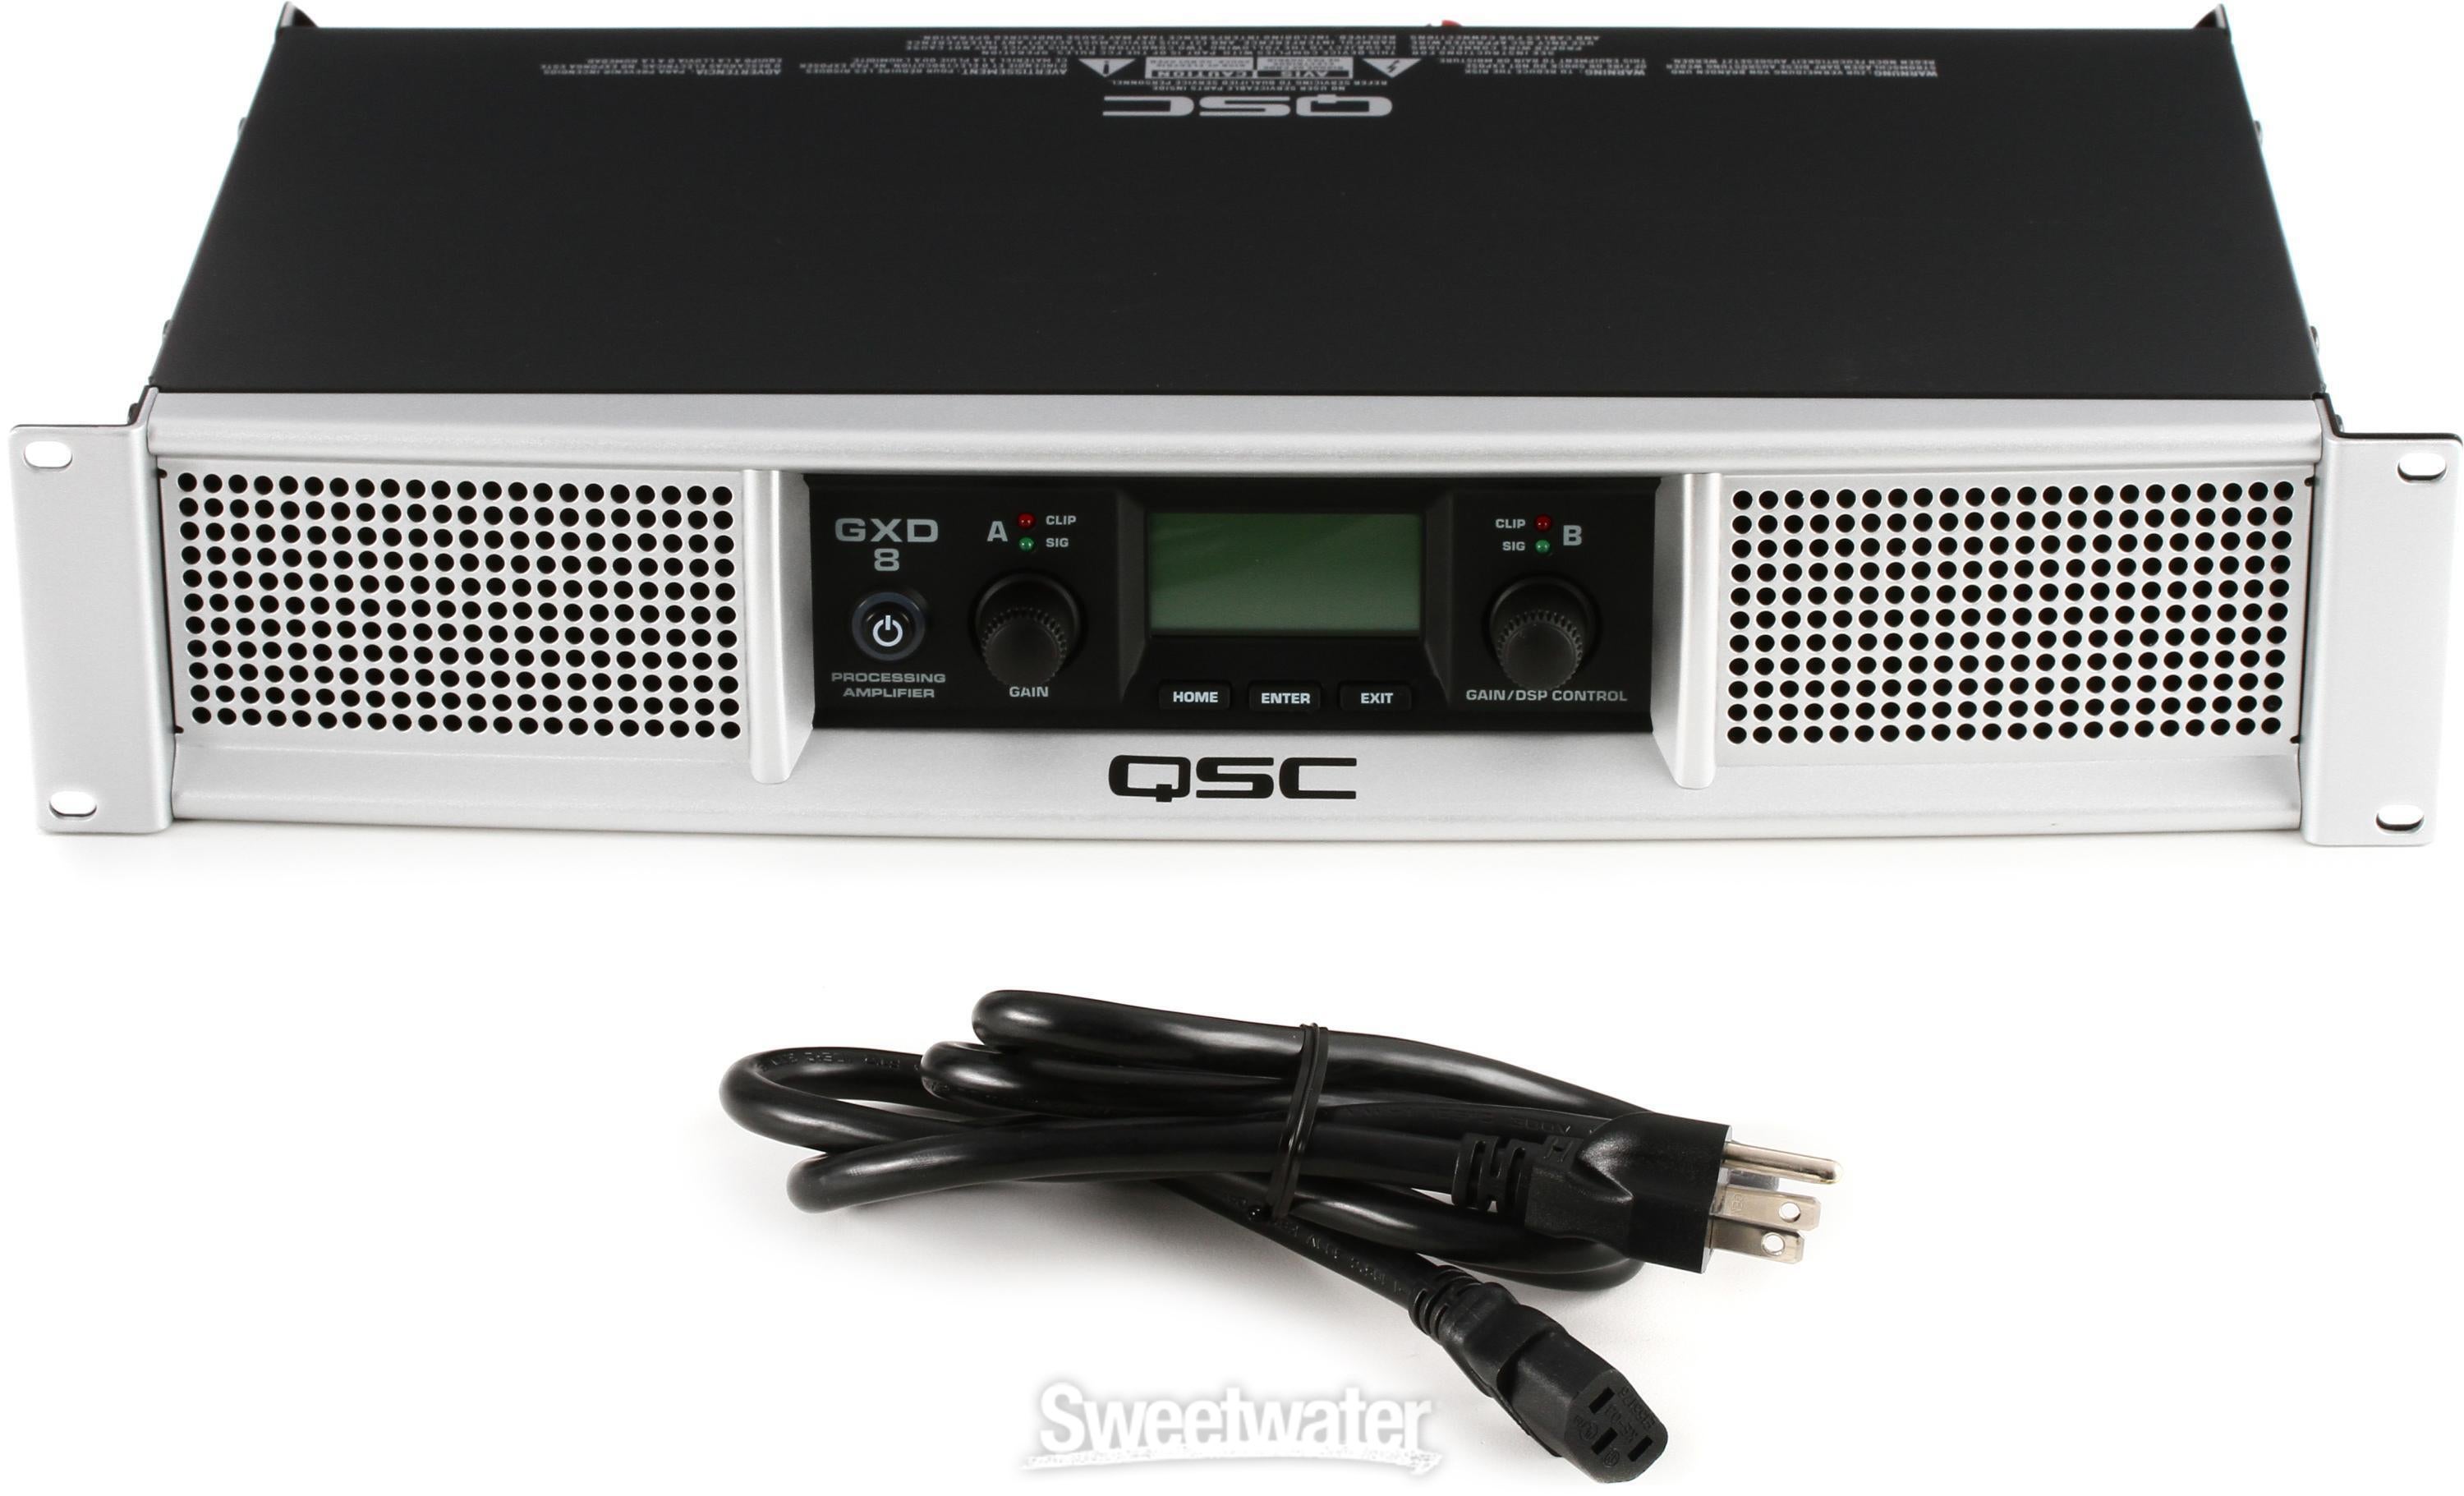 QSC GXD 8 1200W 2-channel Power Amplifier | Sweetwater